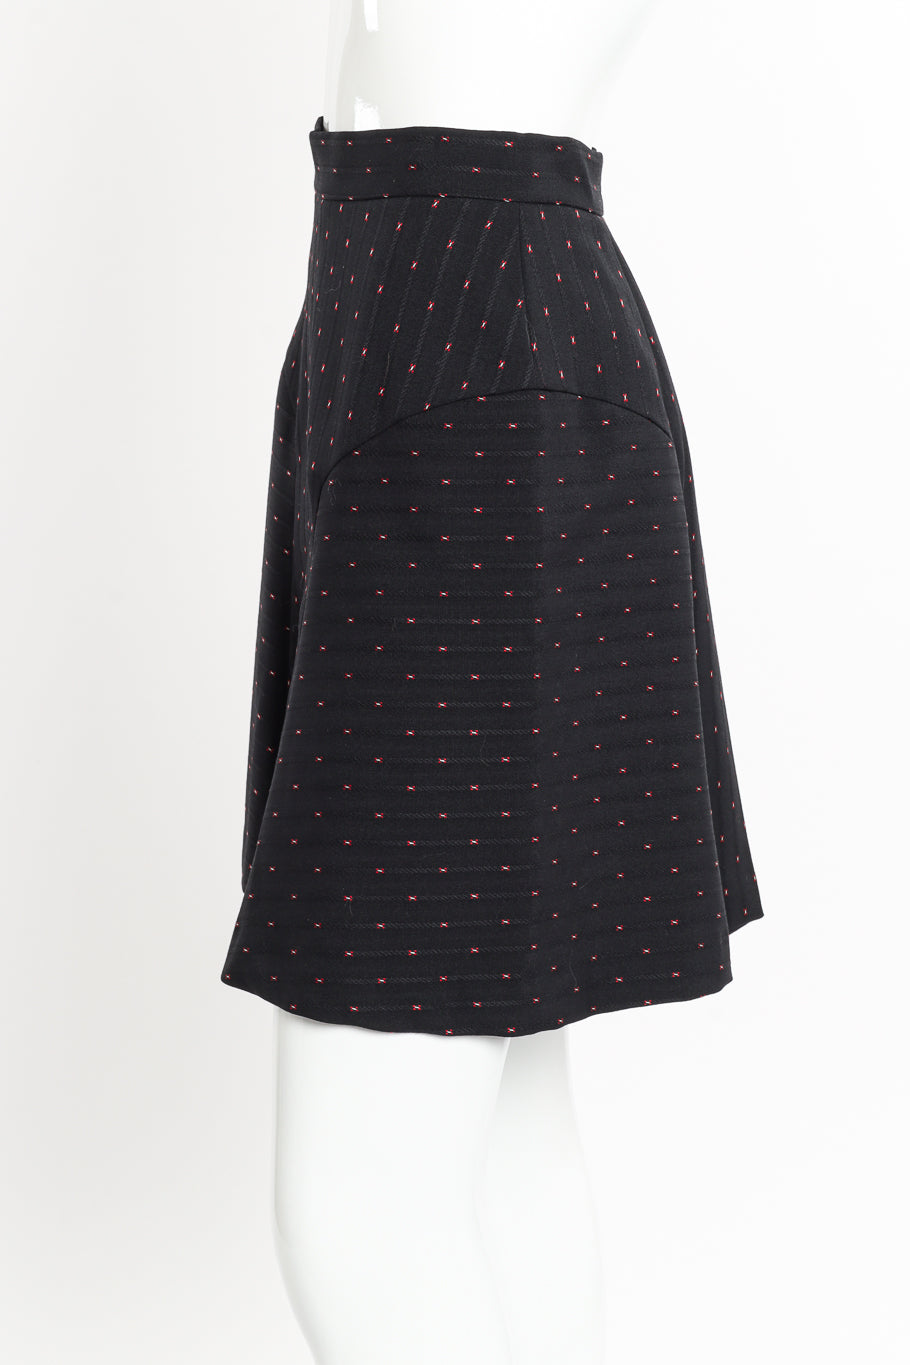 Peplum Flare Jacket & Skirt Suit by Vivienne Westwood on mannequin skirt only side  @recessla